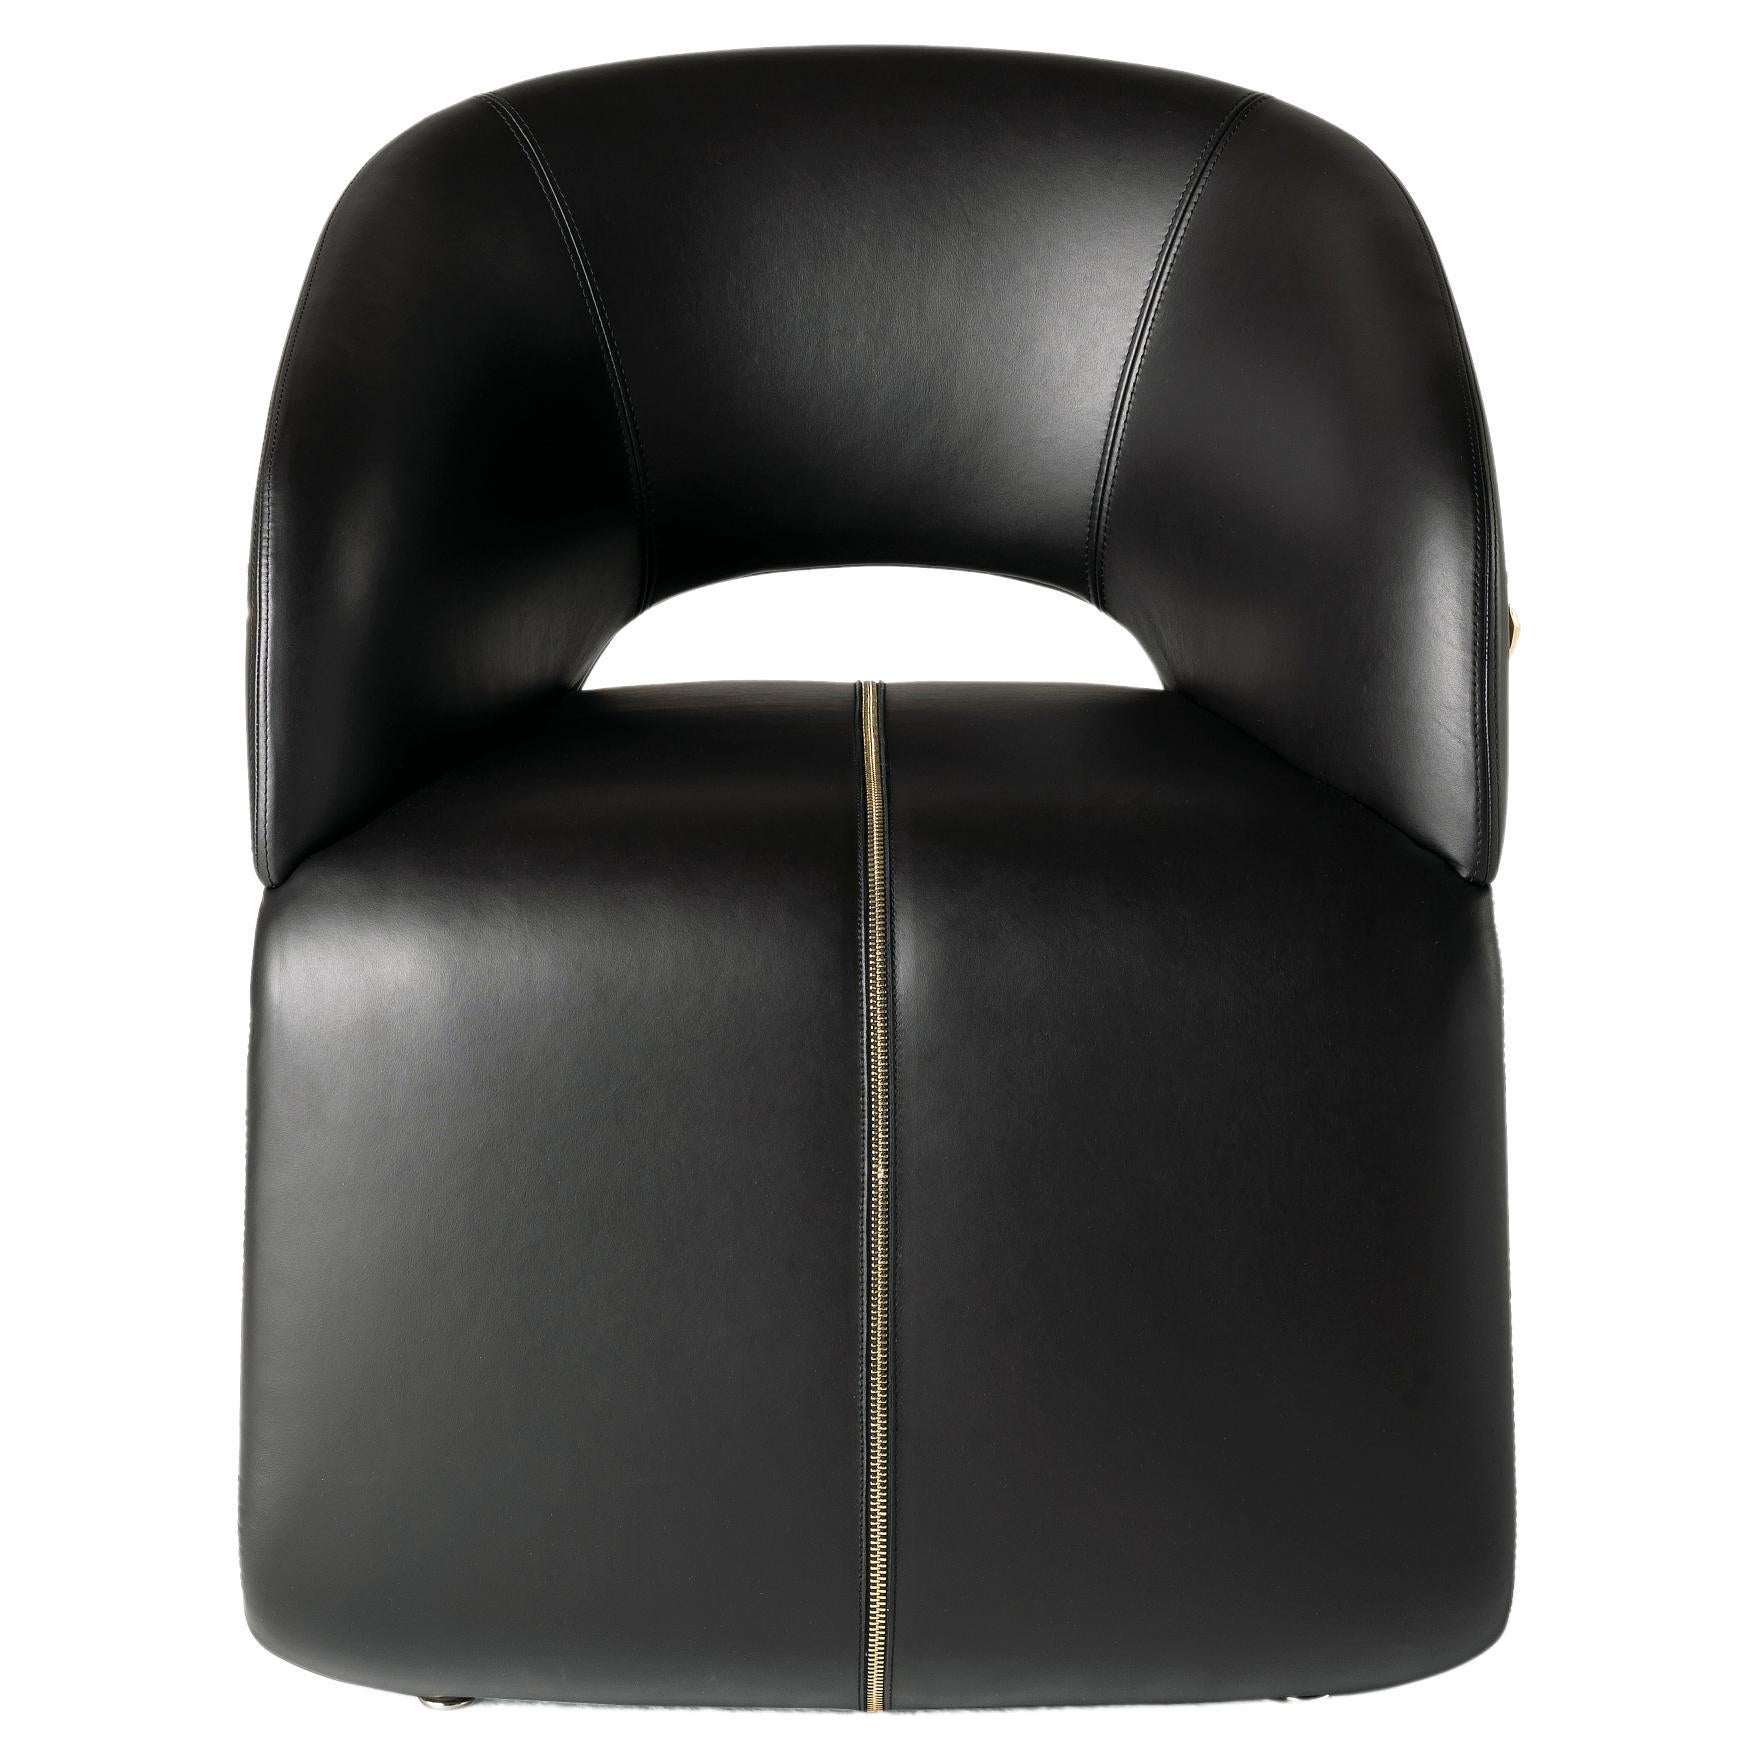 21st Century Wild Armchair in Black Leather by Roberto Cavalli Home Interiors